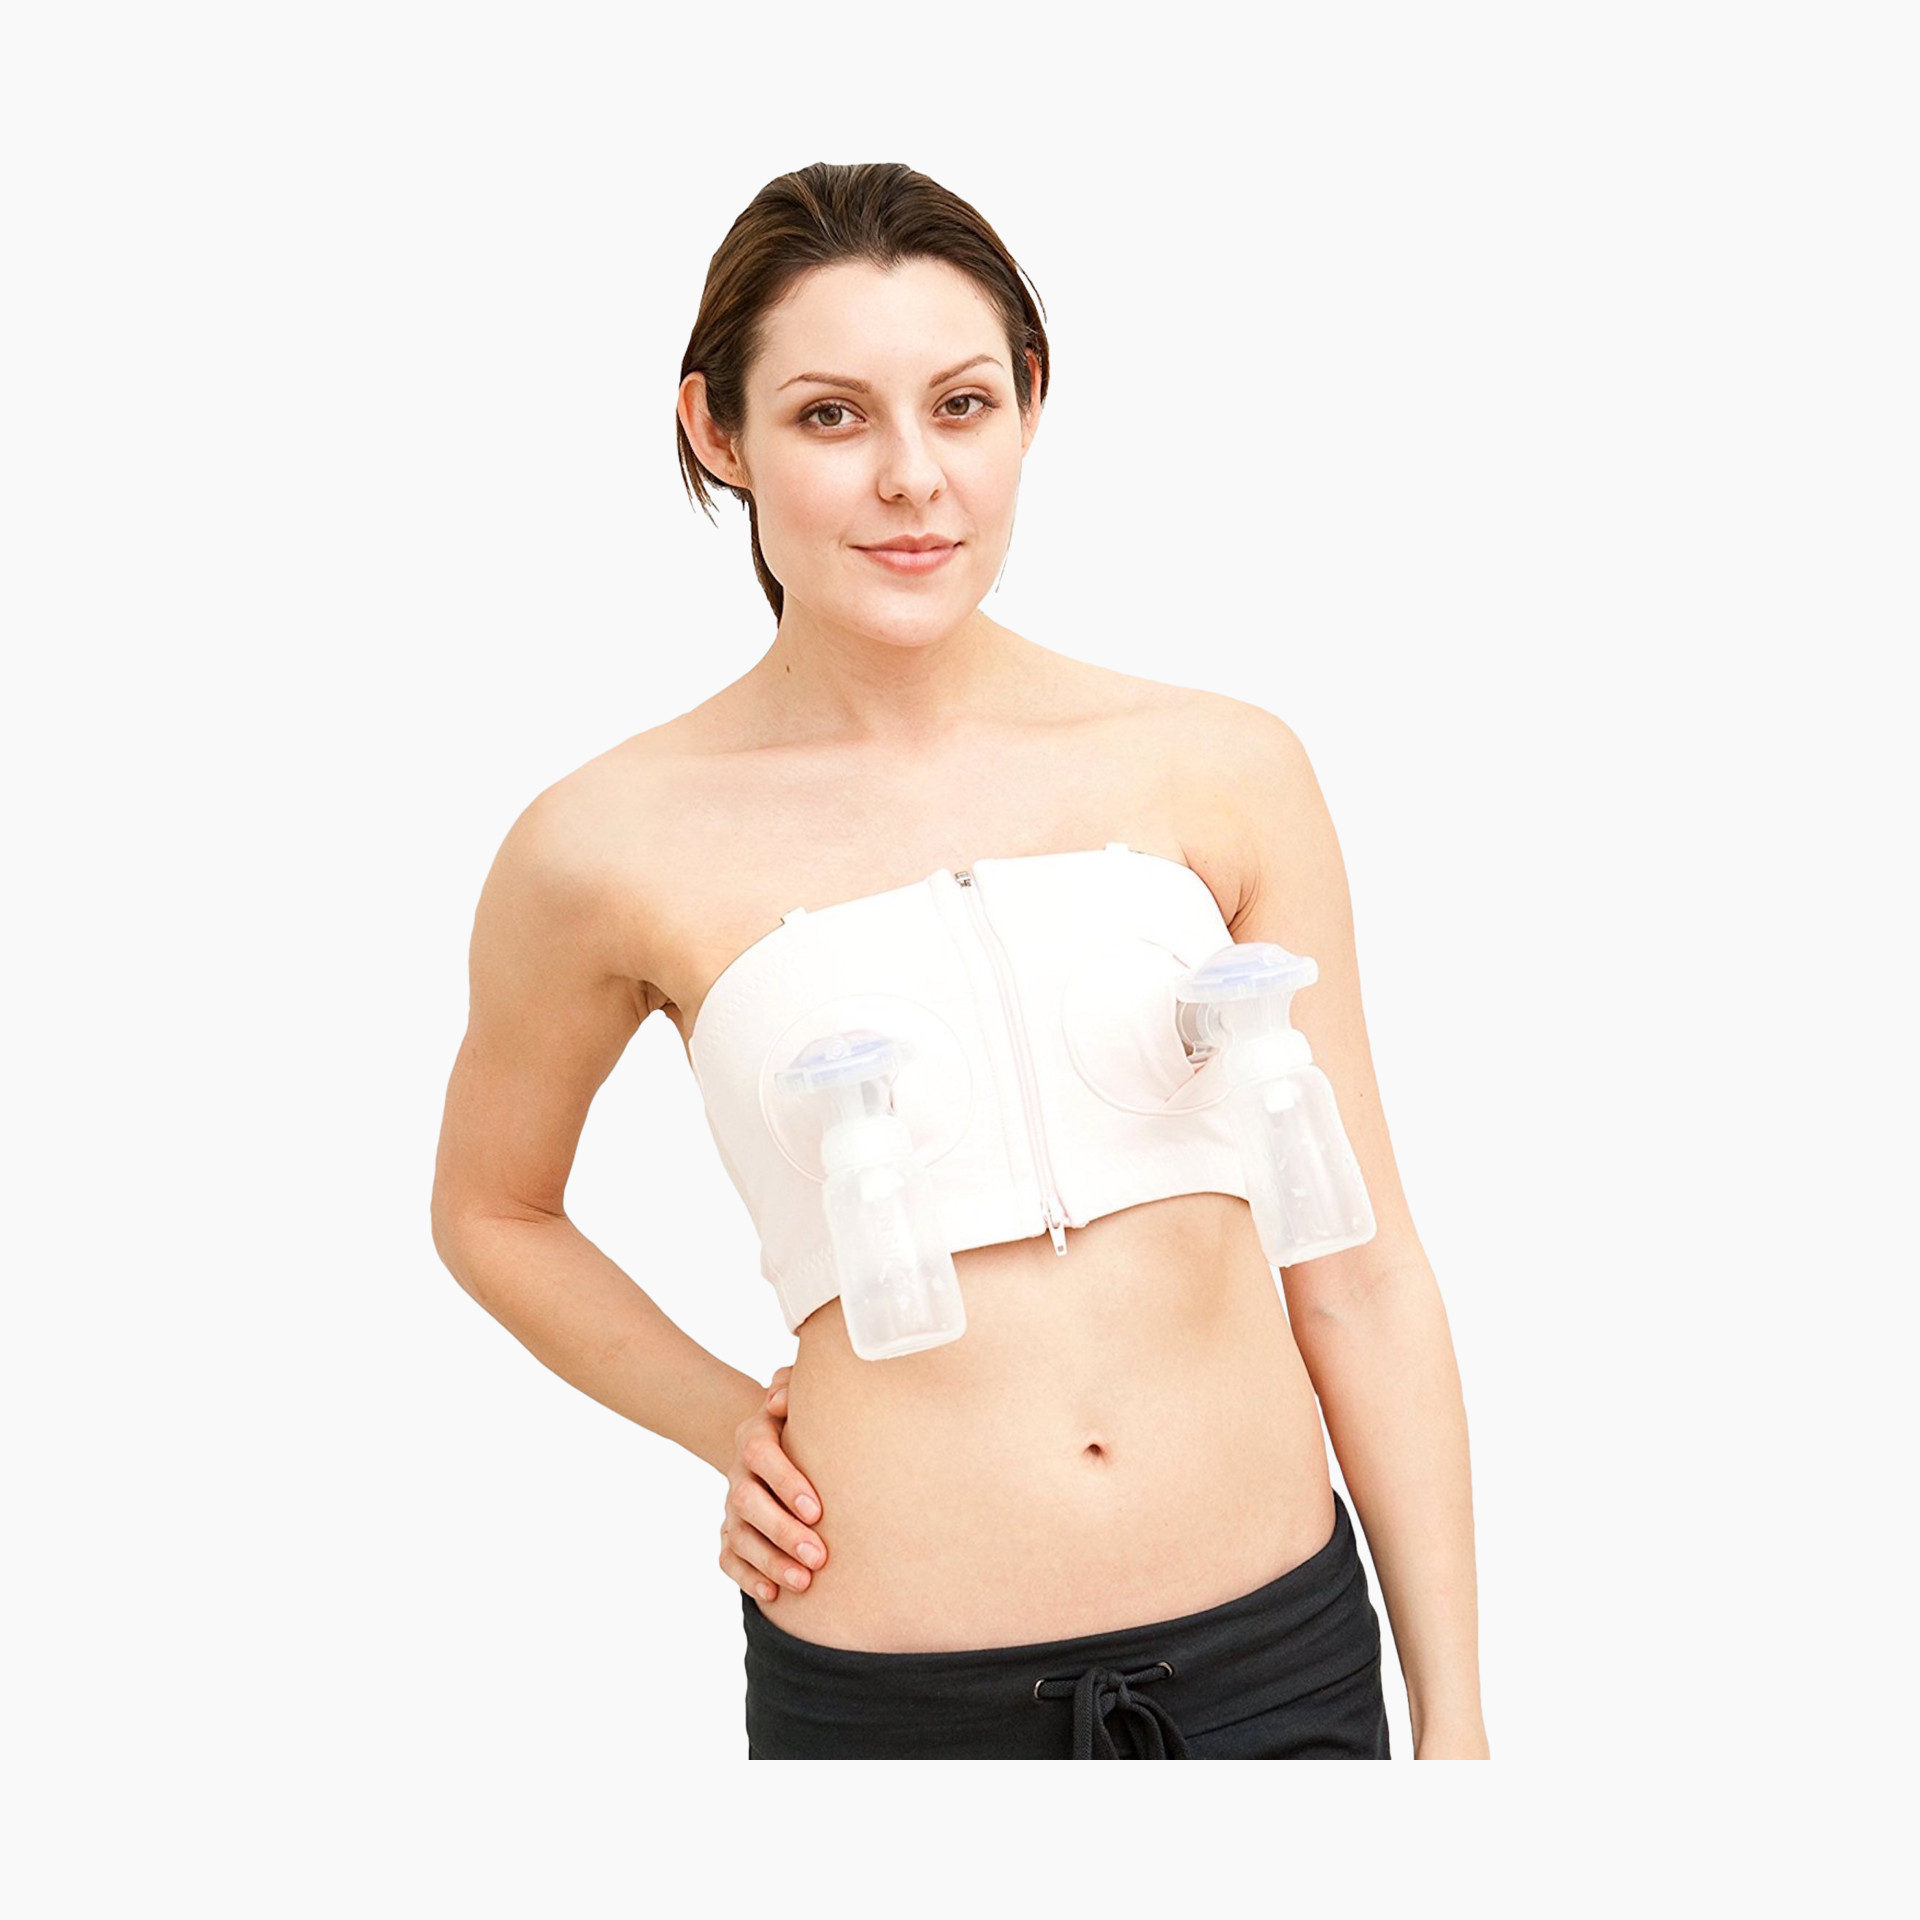 Portable Pumping Bra Adjustable Zipper Nursing clothes,for breast